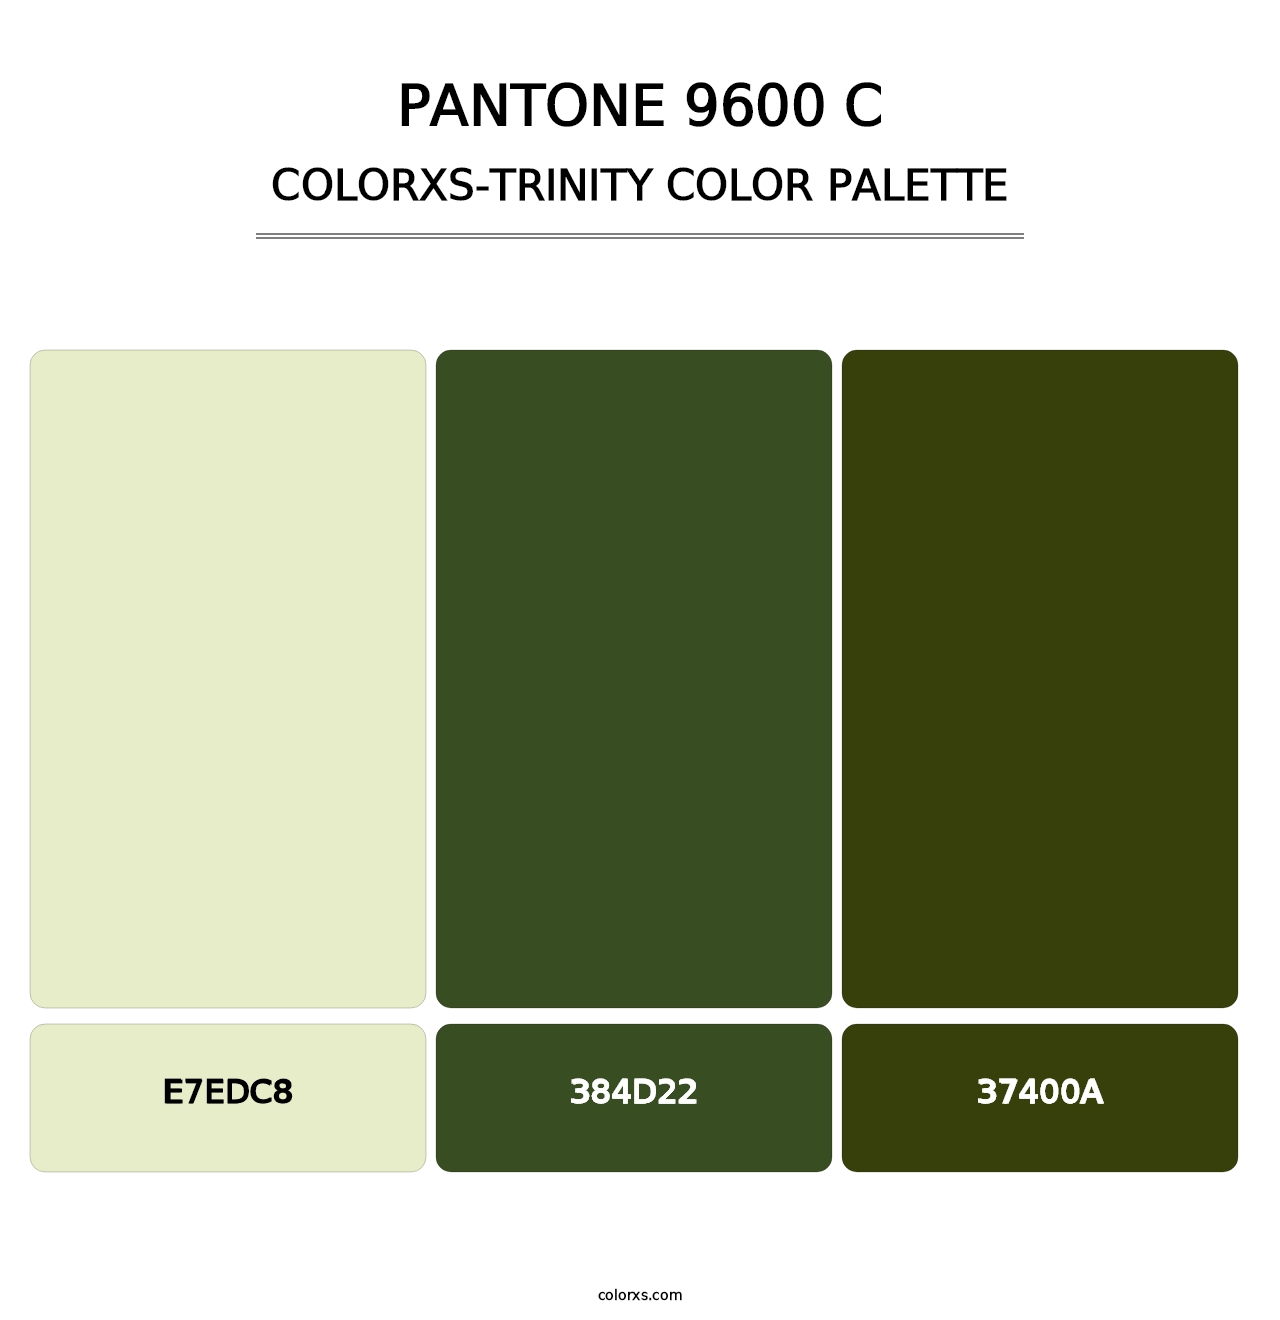 PANTONE 9600 C - Colorxs Trinity Palette